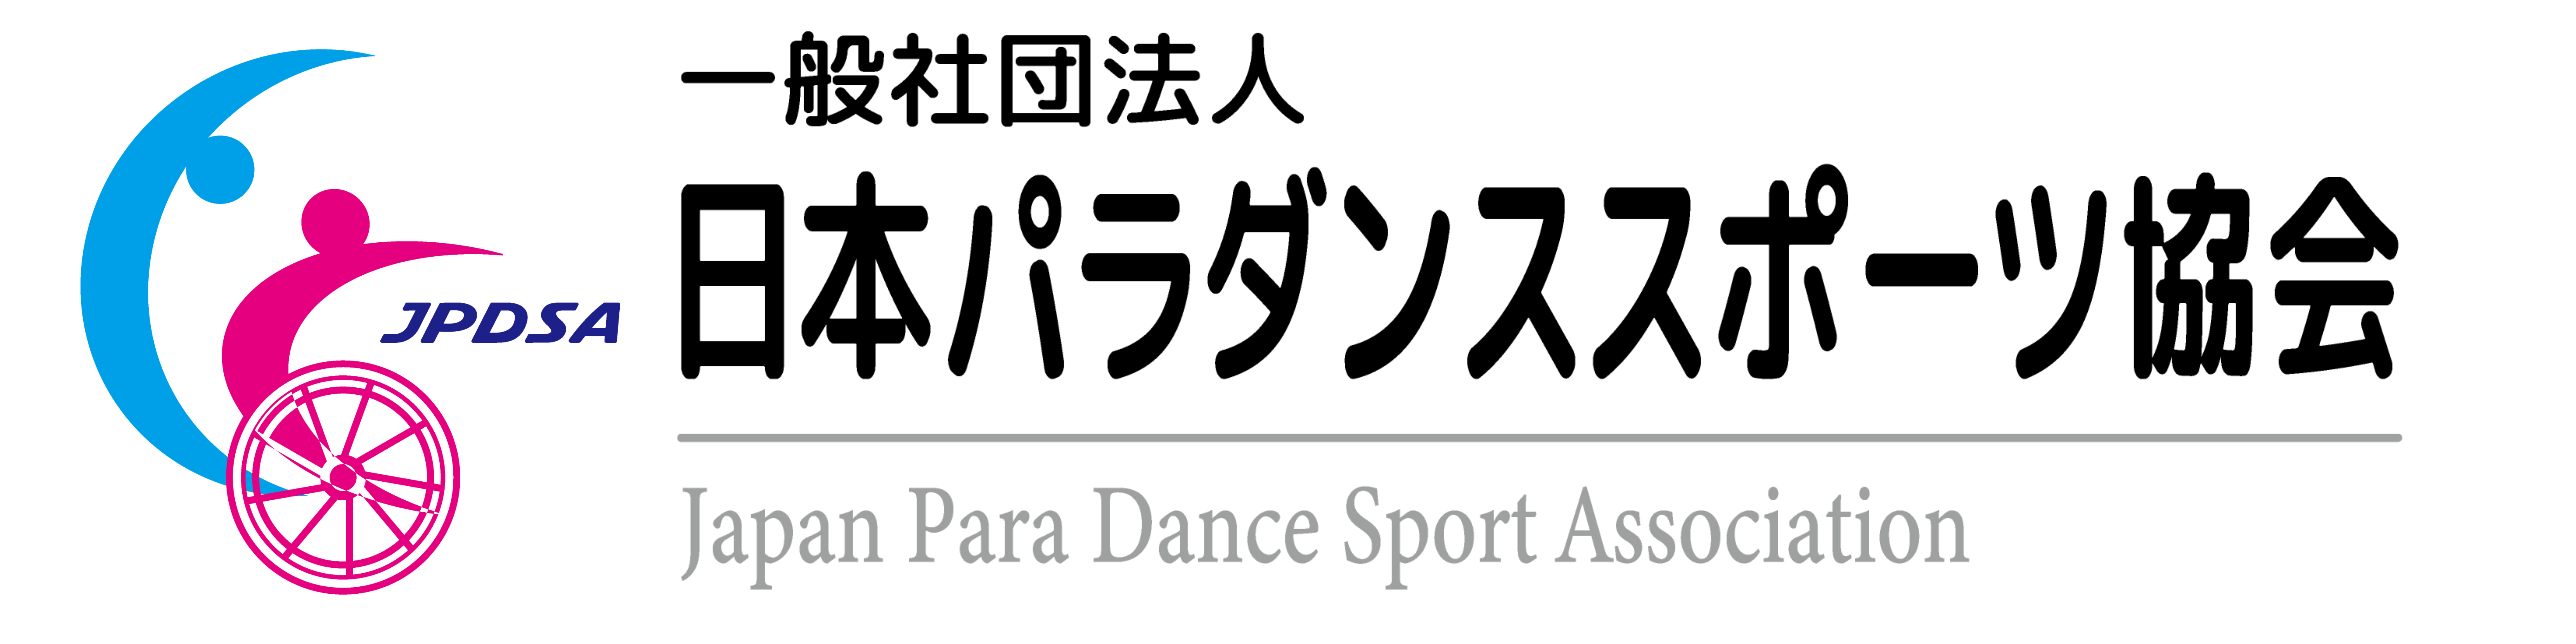 JPDSA-一般社団法人日本パラダンススポーツ協会